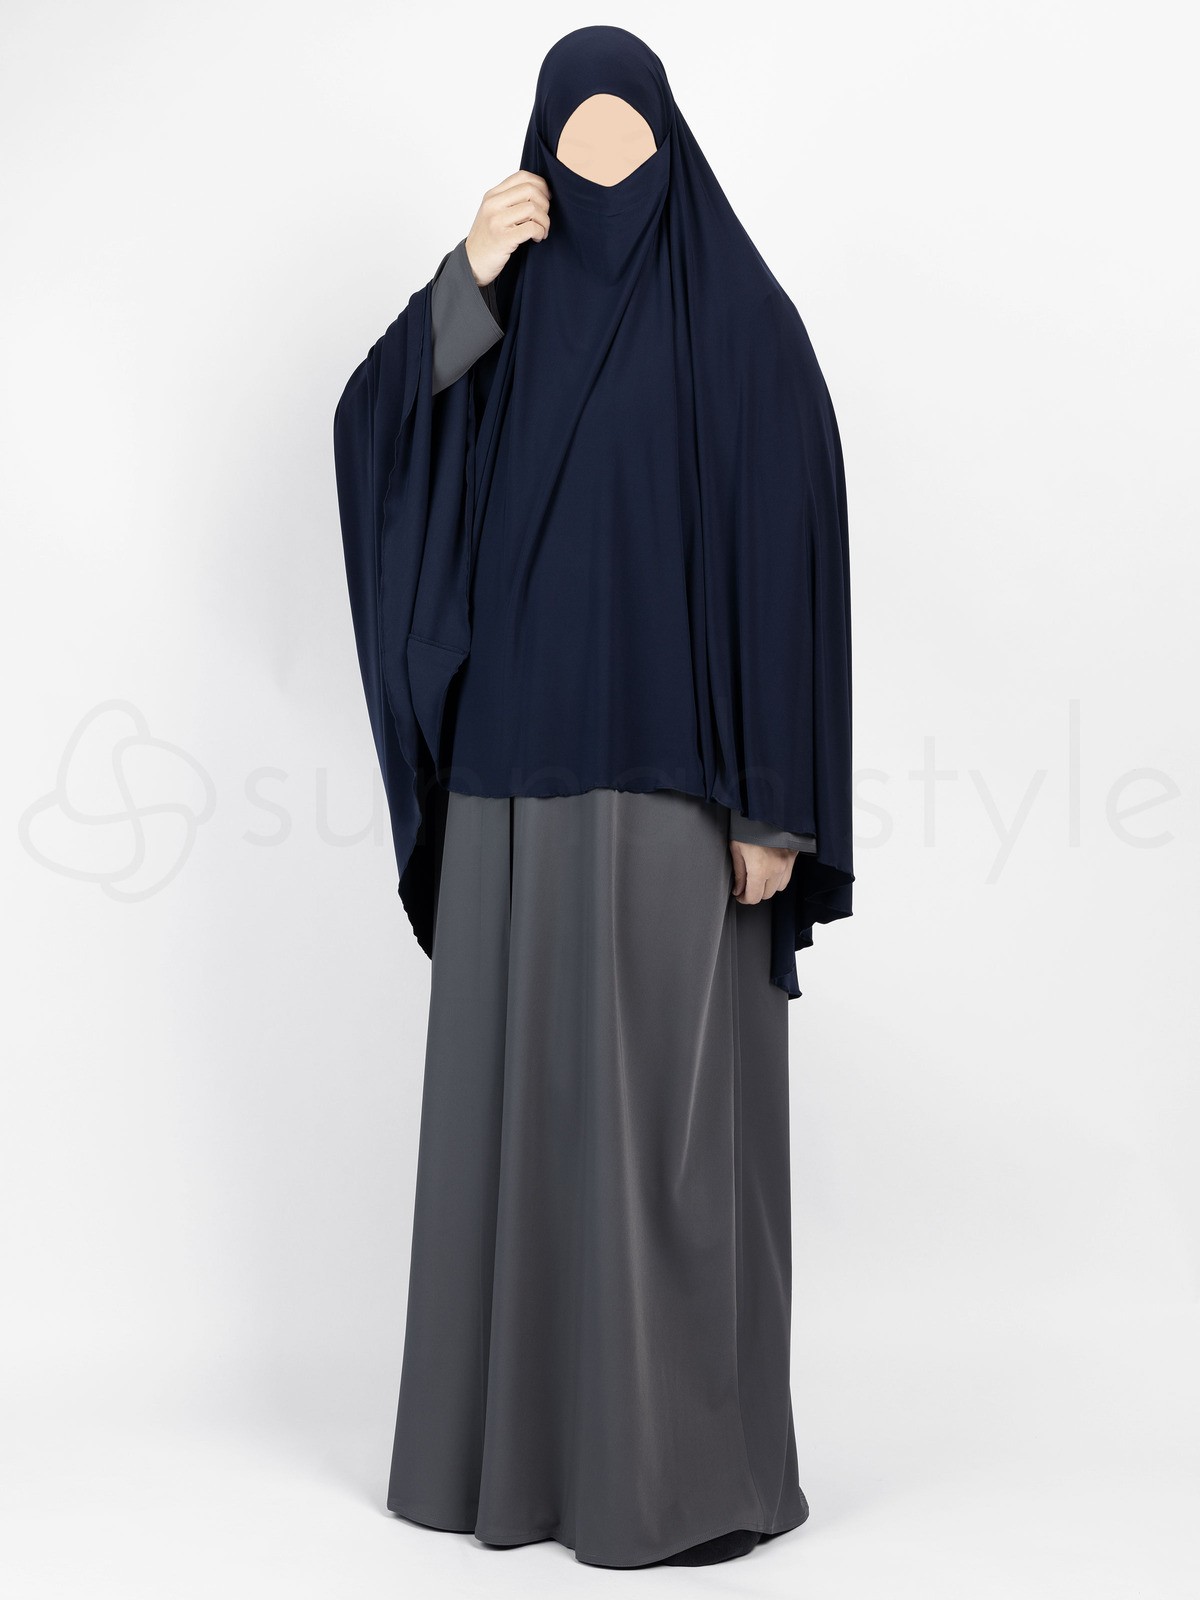 Sunnah Style - Jersey Khimar - Thigh Length (Navy Blue)